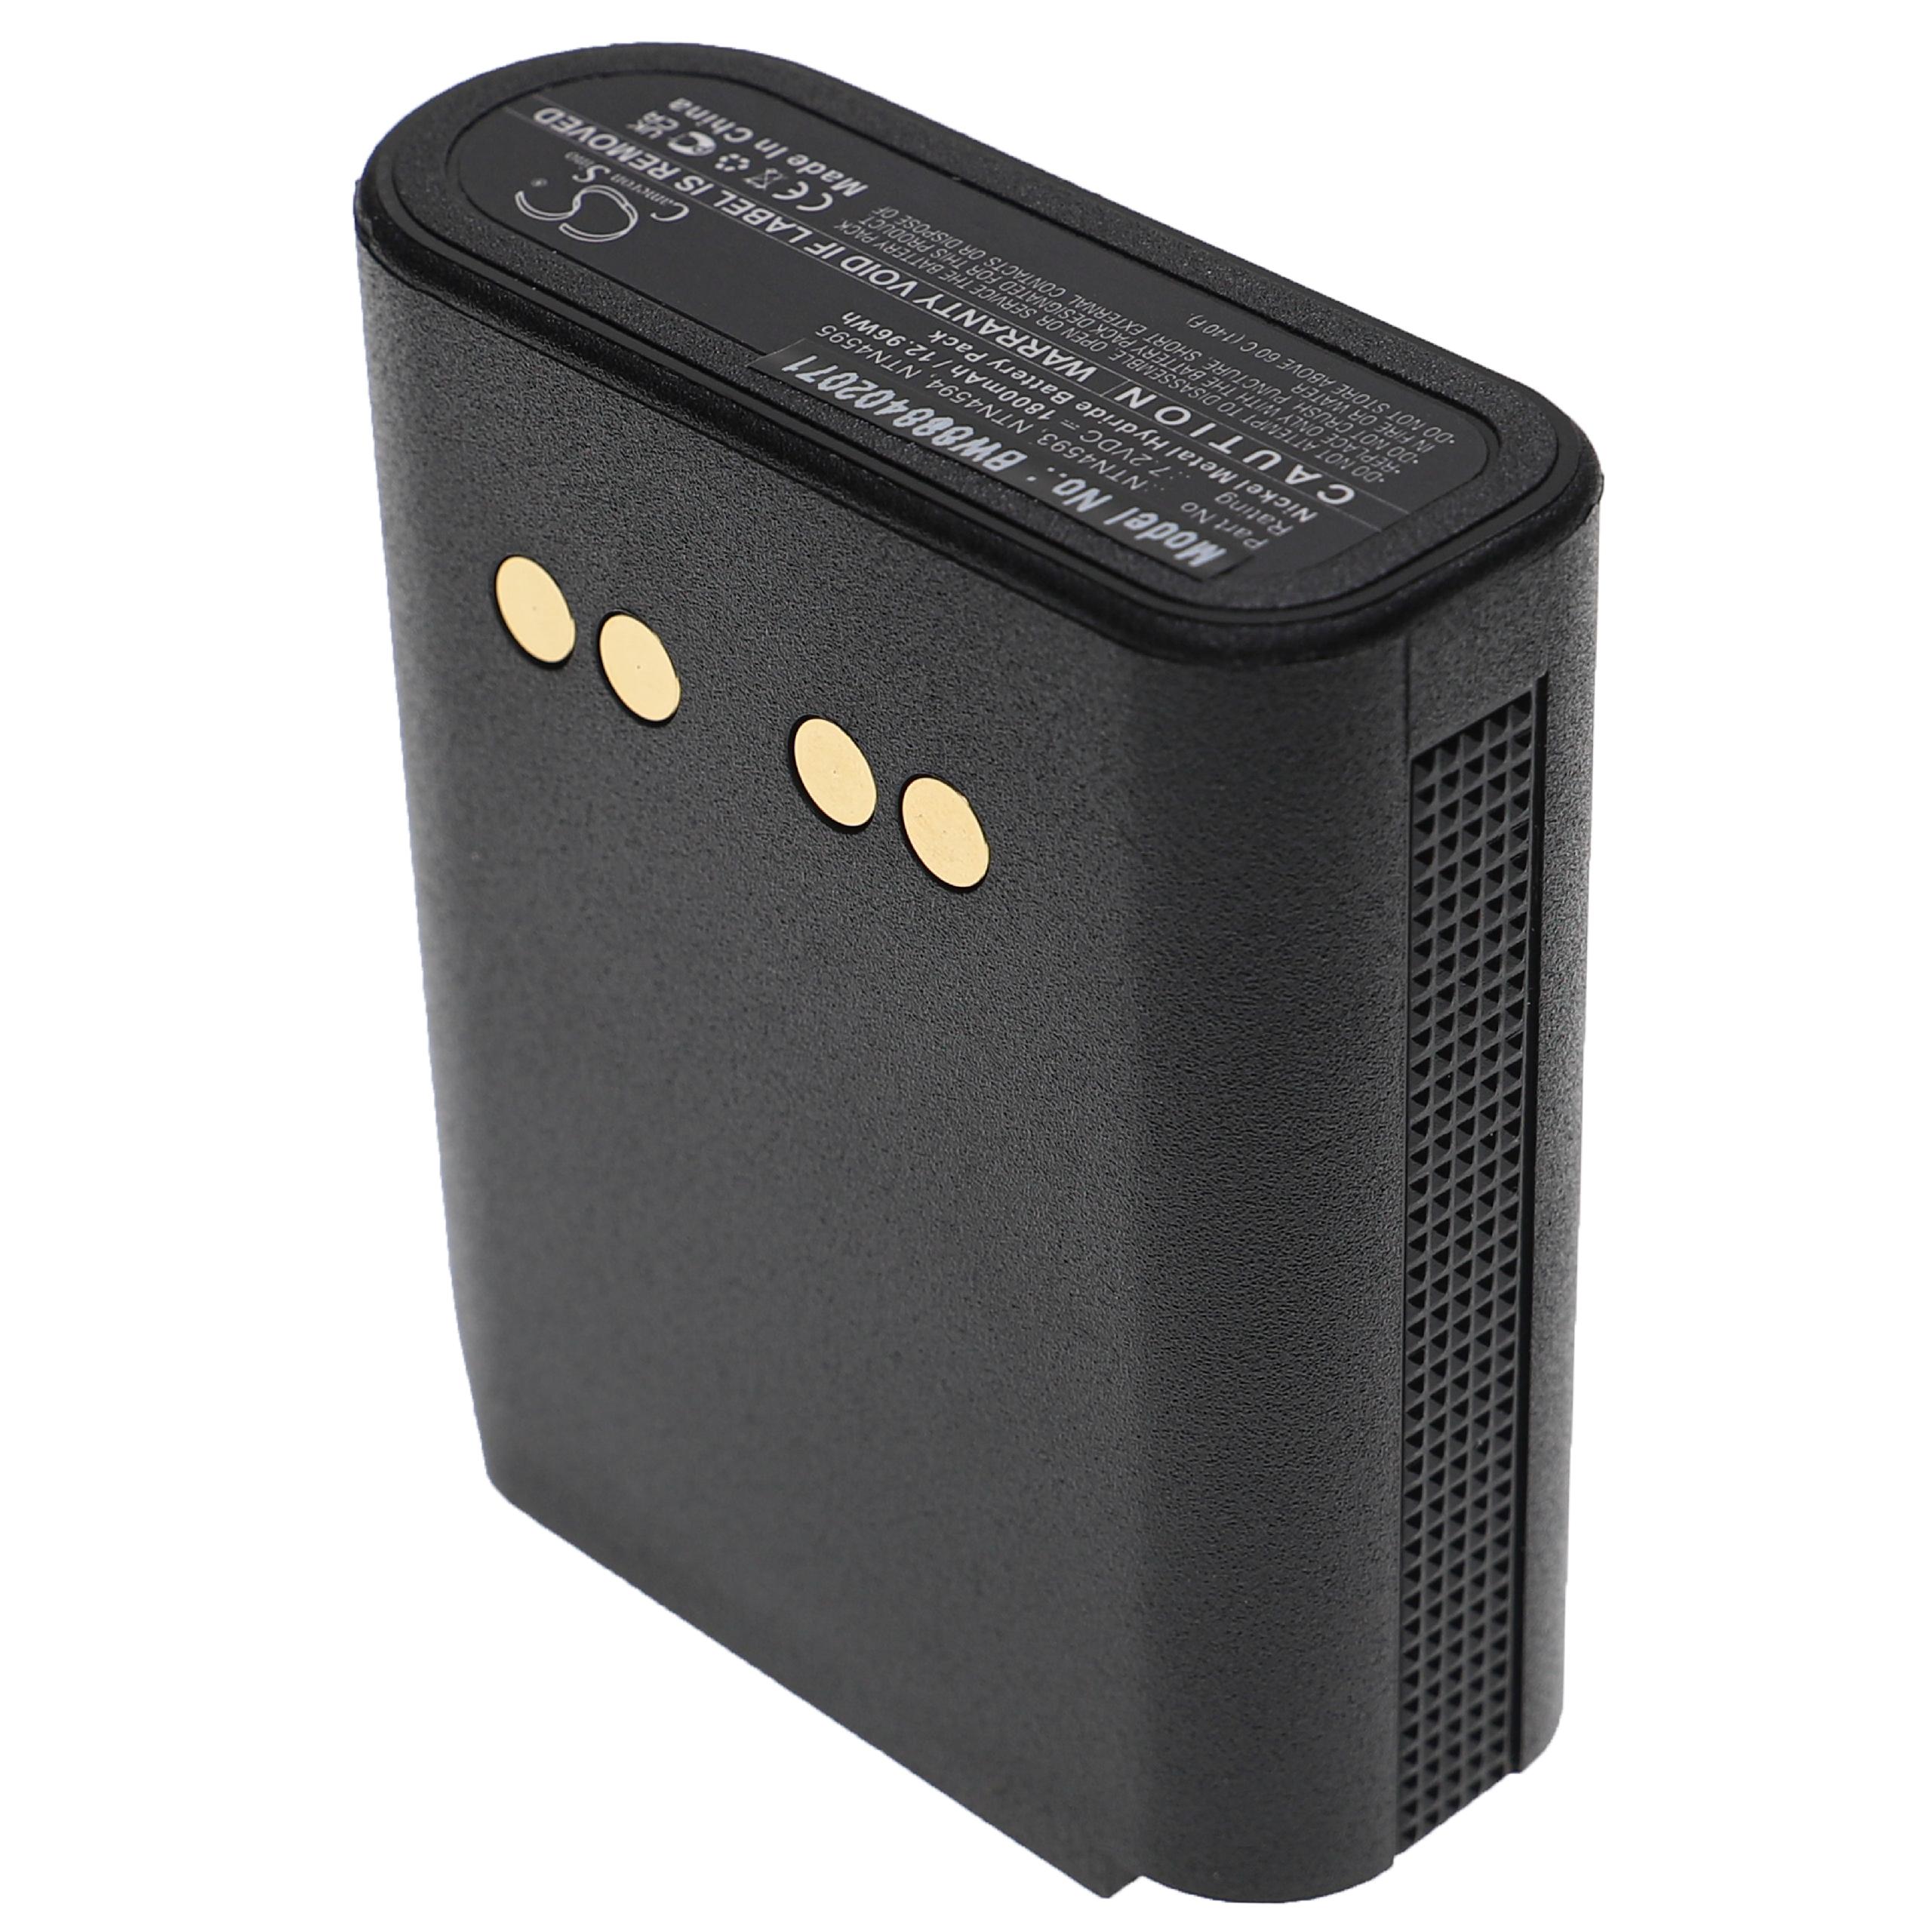 Akumulator do radiotelefonu zamiennik Motorola NTN4538, NTN4592, NTN4593, NTN4593DR - 1800 mAh 7,2 V NiMH